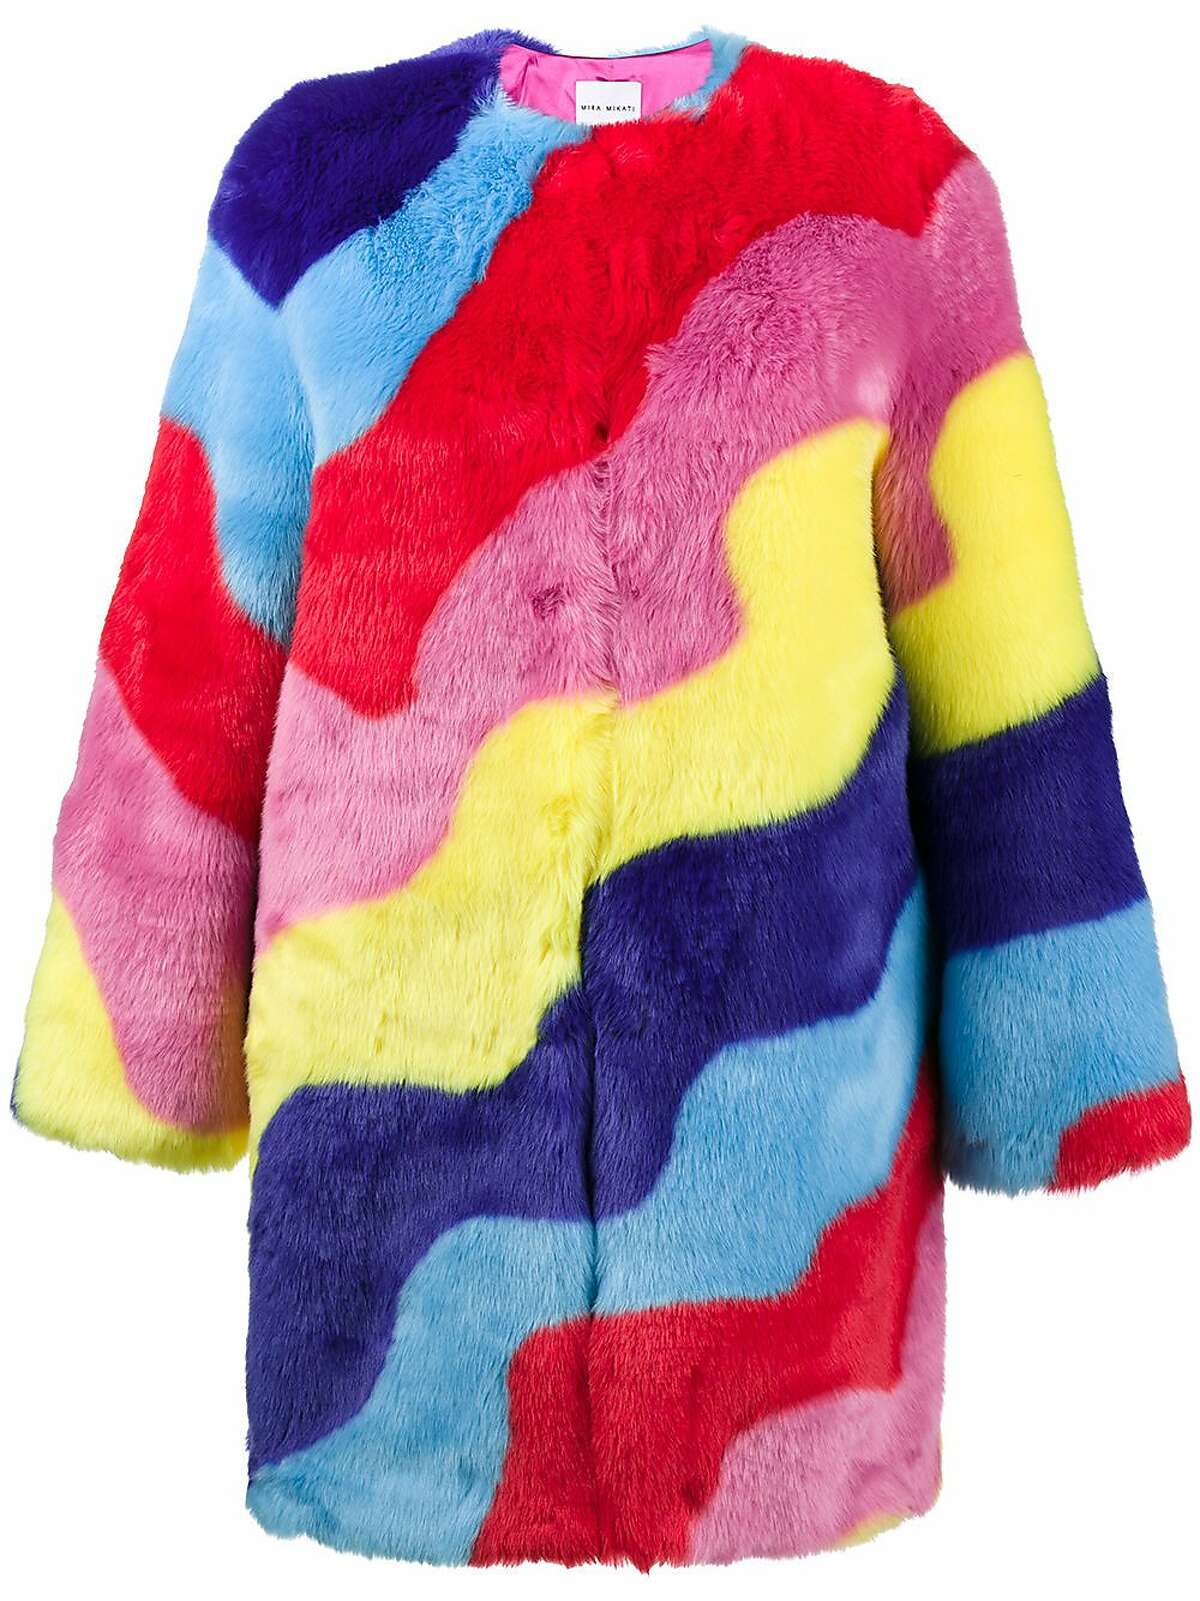 MIRA MIKATI� faux fur rainbow wave coat� $629 Available at FARFETCH.COM